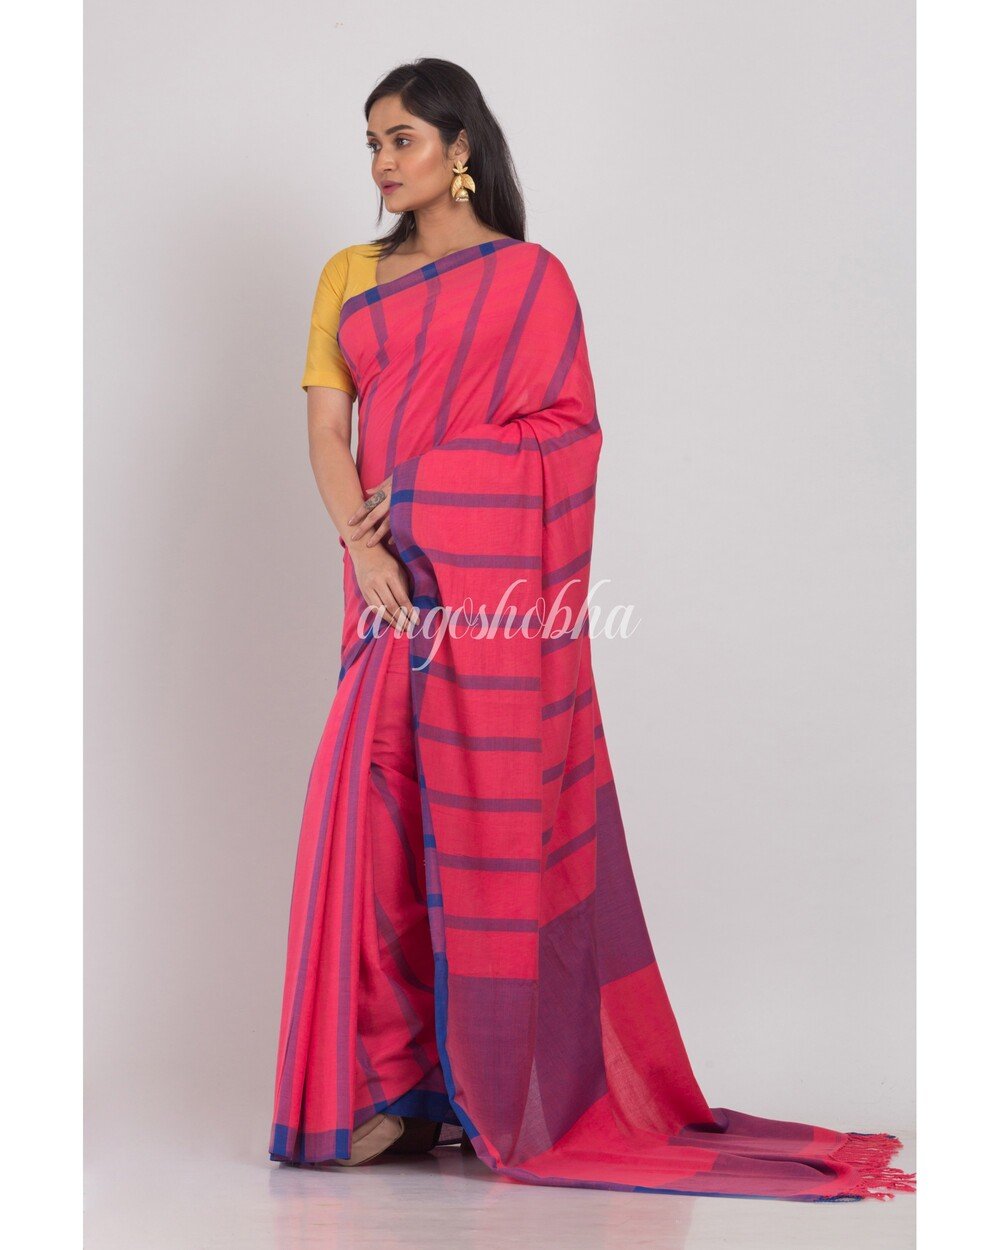 Women's Pink Handloom Cotton Saree - Angoshobha